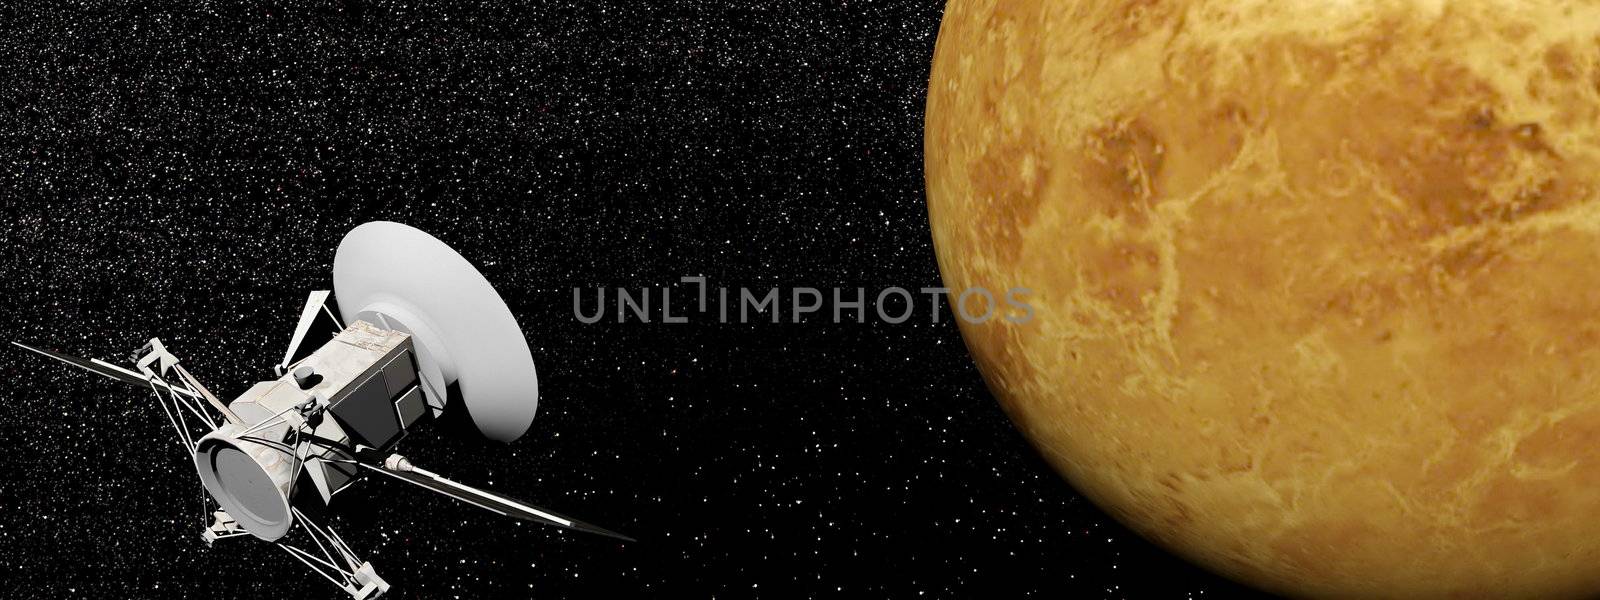 Magellan spacecraft near Venus planet - 3D render by Elenaphotos21